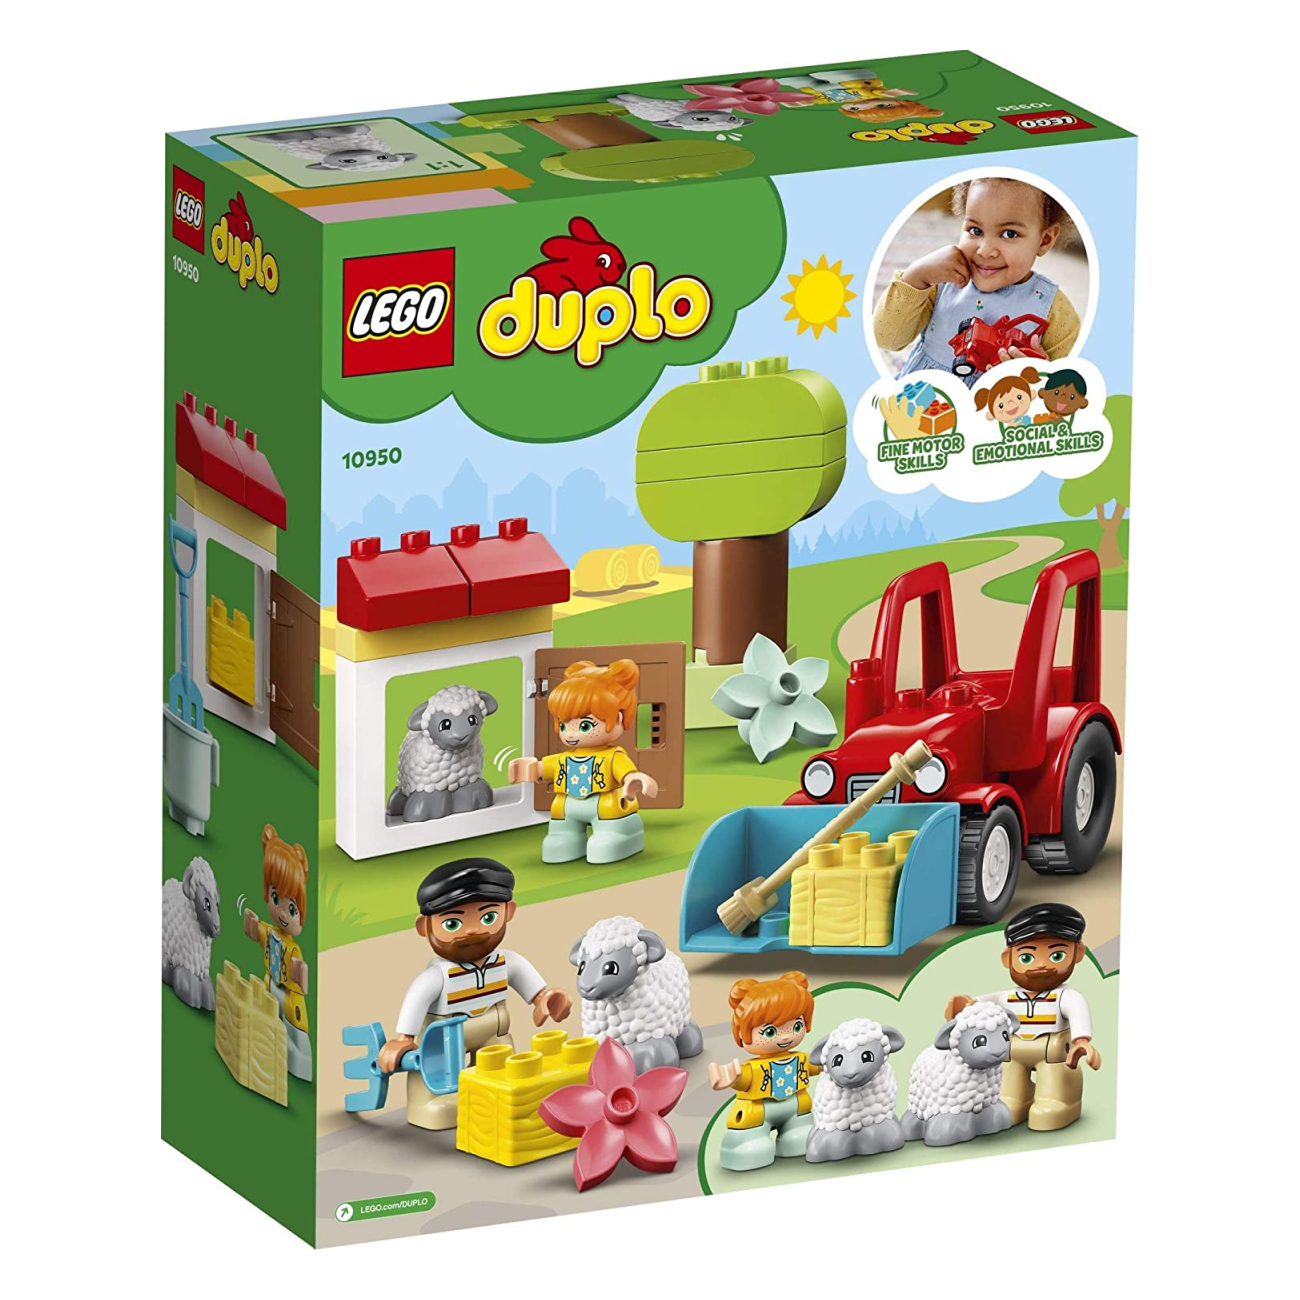 LEGO Duplo & Animal Care – Child's Play